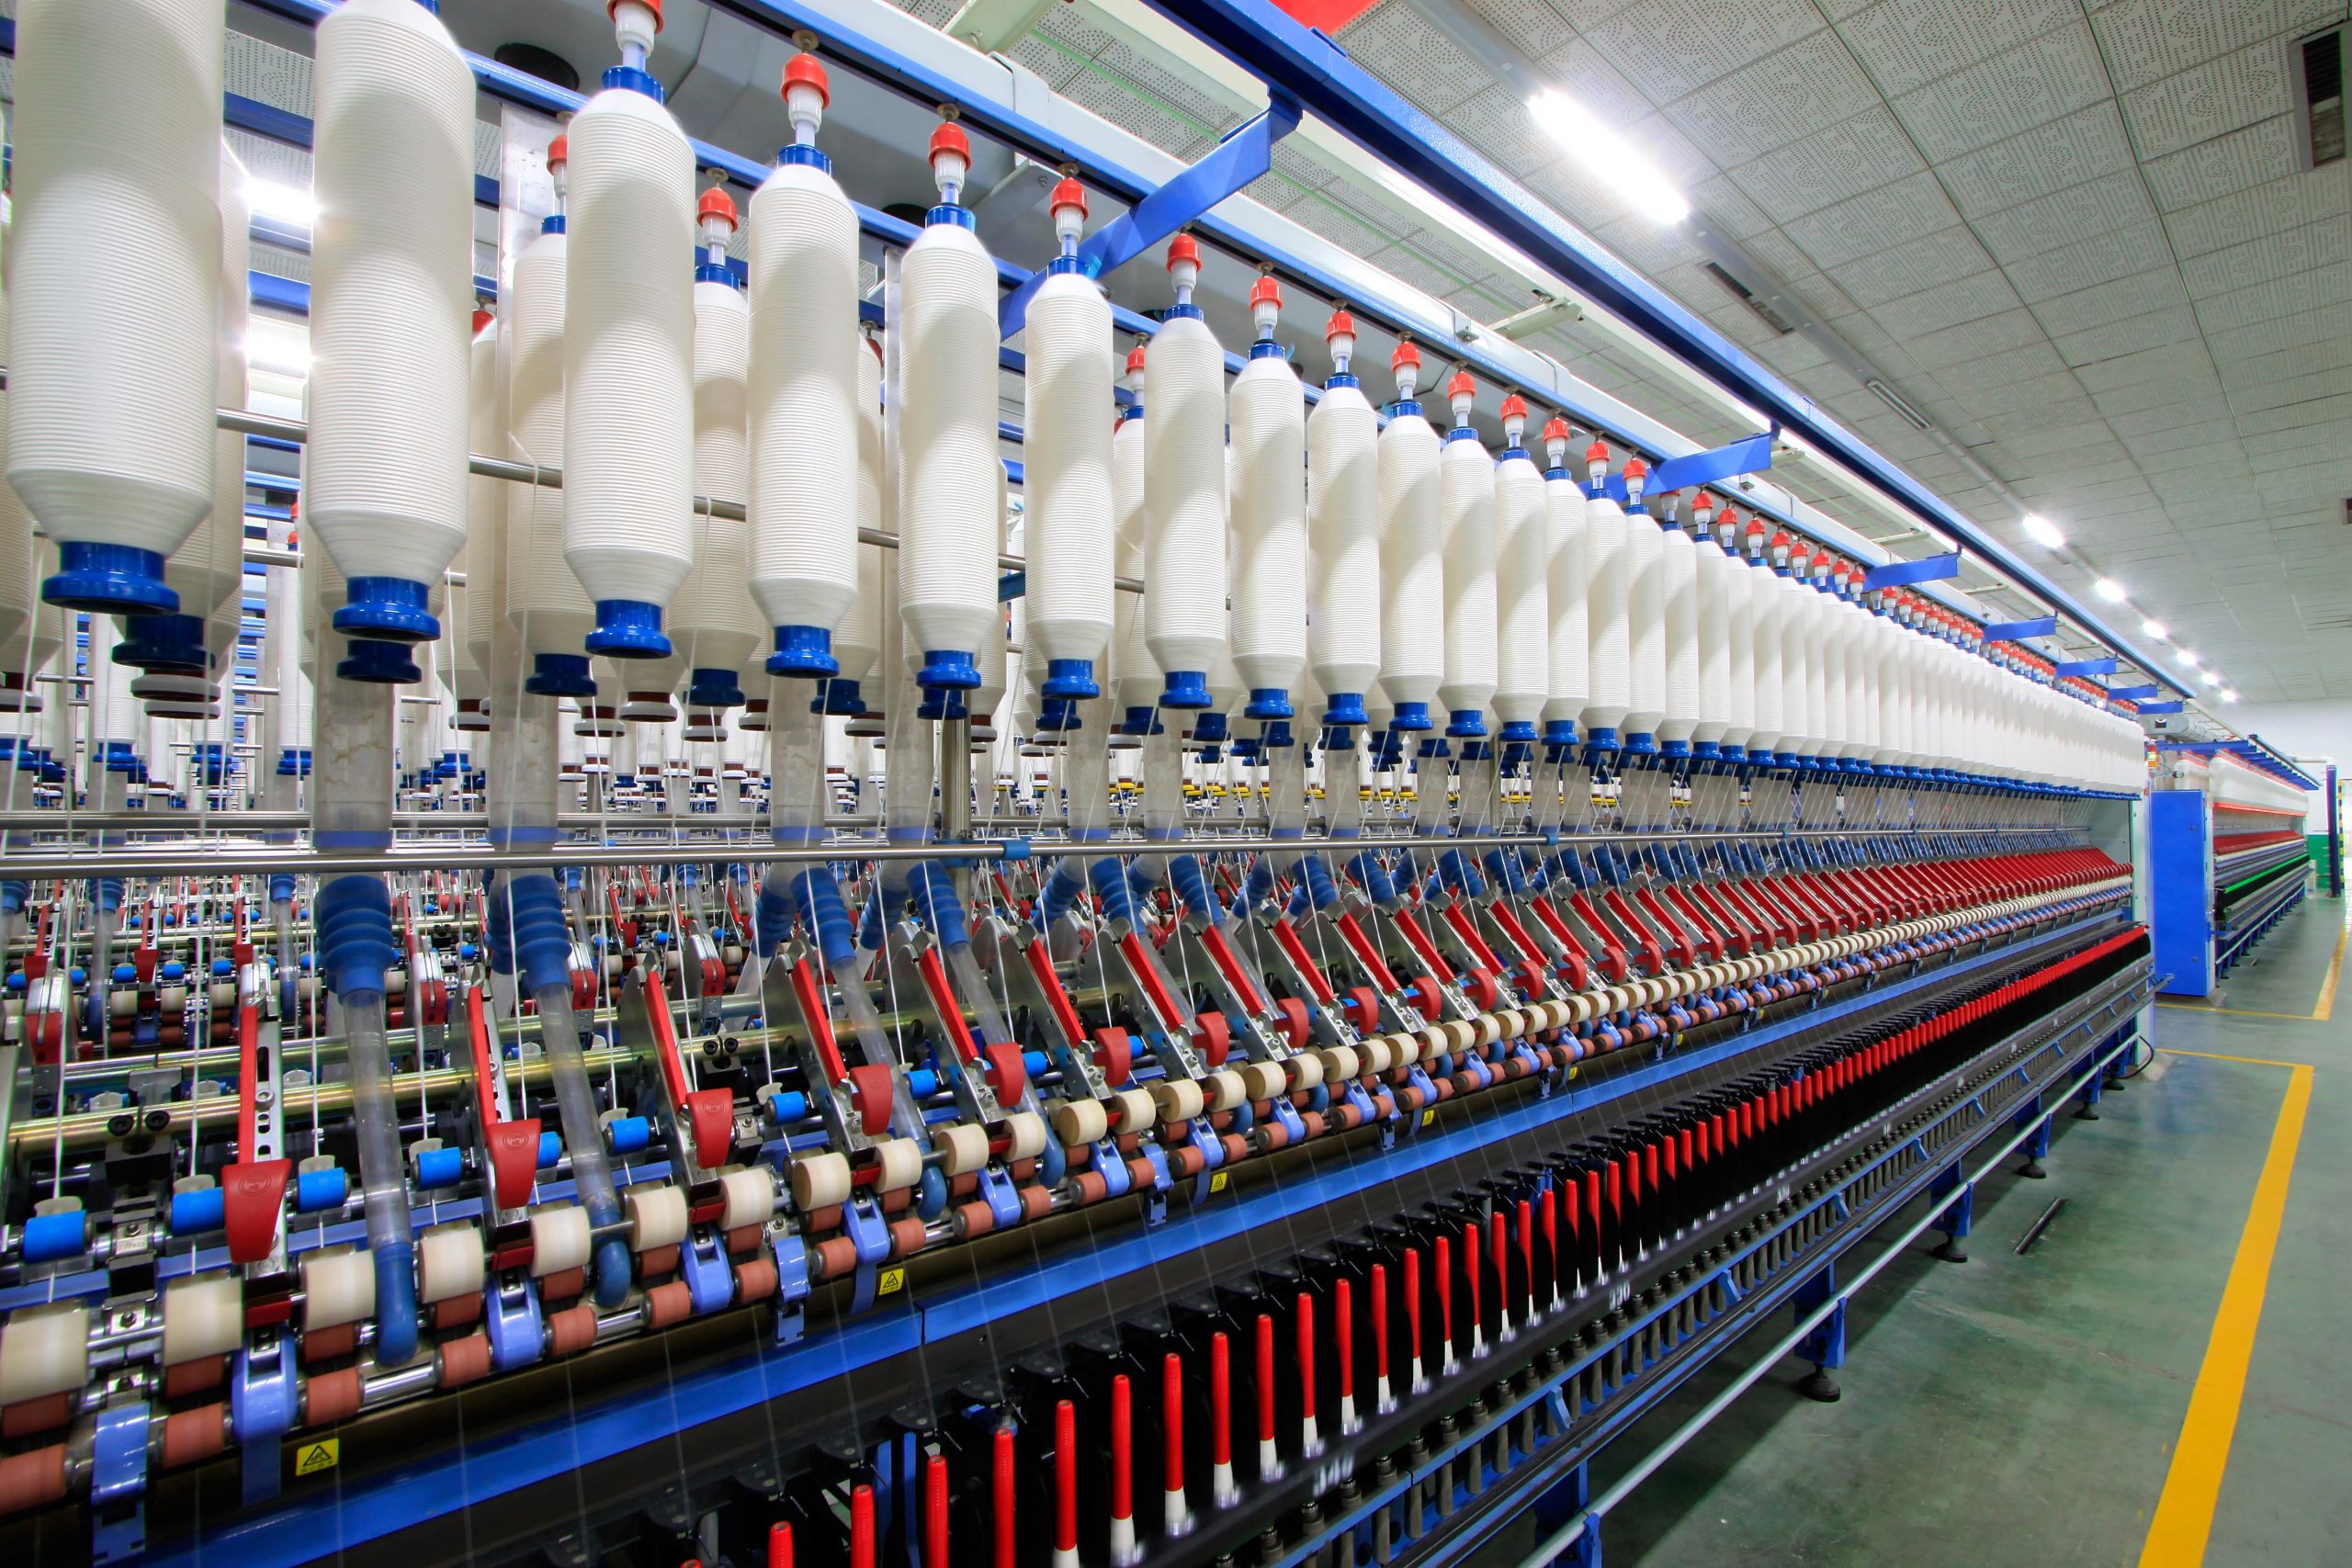 Fabric Manufacturers in India, Garment Manufacturers in India, Yarn  Manufacturers in India, Knitted Manufacturers in India, Textile Mills India, Textile Mills In Mumbai, Fiber, Yarn, Woven Fabric, Knitted Fabric,Garments  manufacturing in India